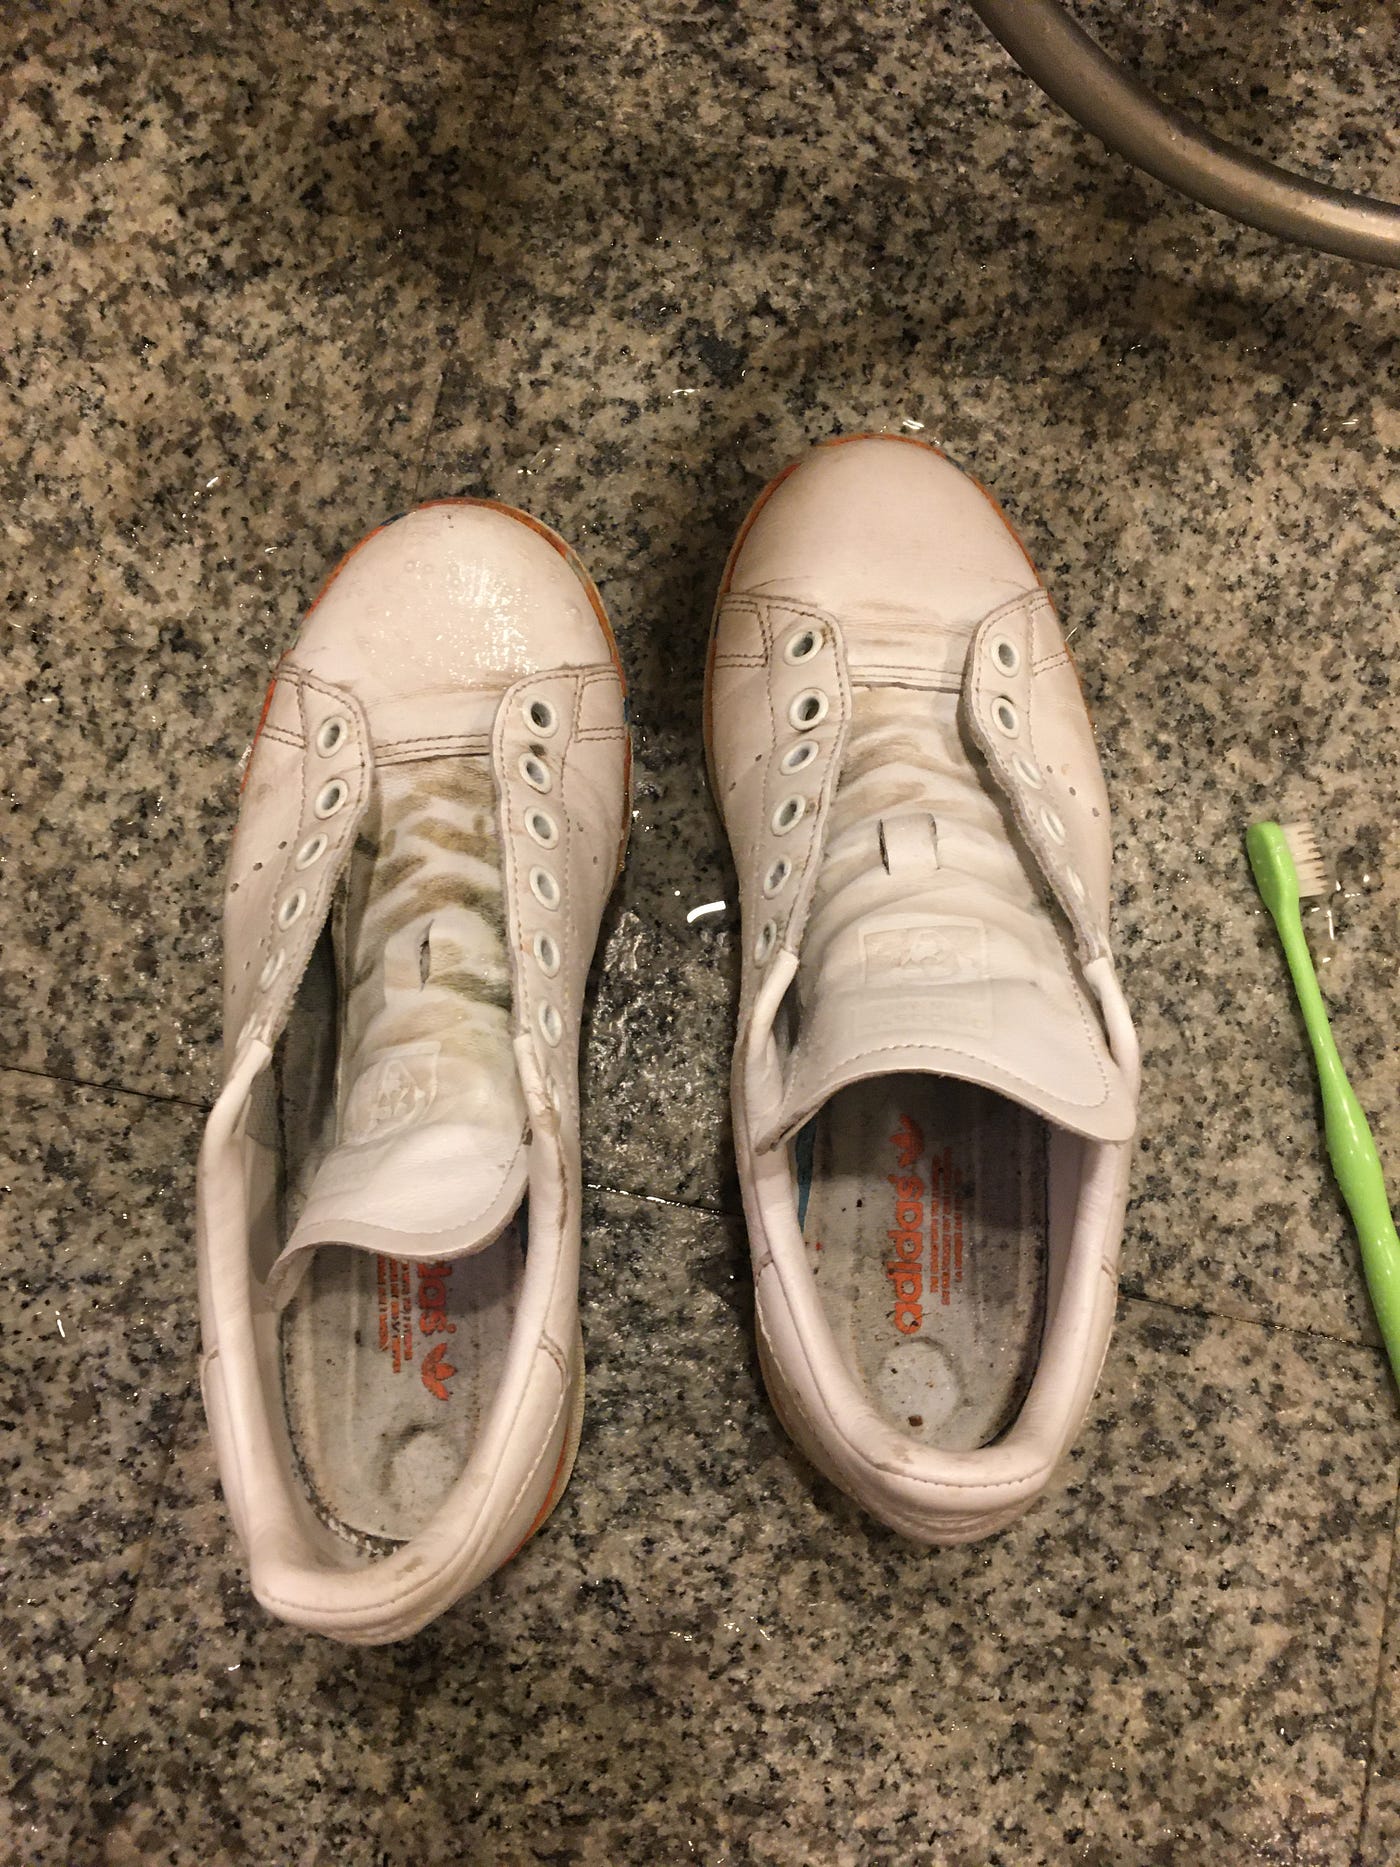  Shoe Glue Sole Repair Adhesive, Evatage Waterproof Shoe Repair  Glue Kit with Shoe Fix Glue for Sneakers Boots Leather Handbags Fix Soles  Heels Repair : Clothing, Shoes & Jewelry